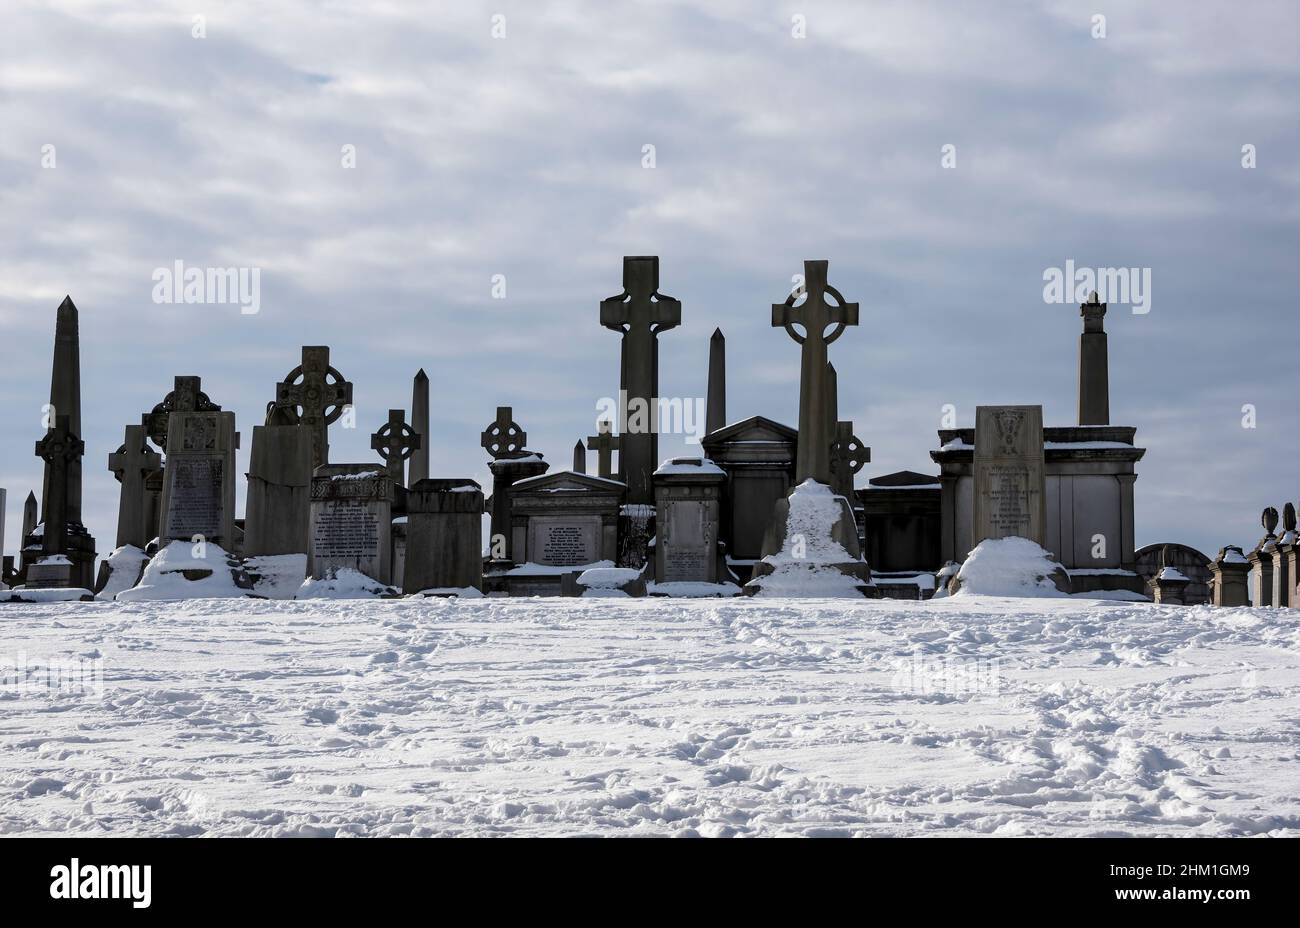 Gravestones in the snow at Necropolis Cemetry, Glasgow, Scotland. Stock Photo